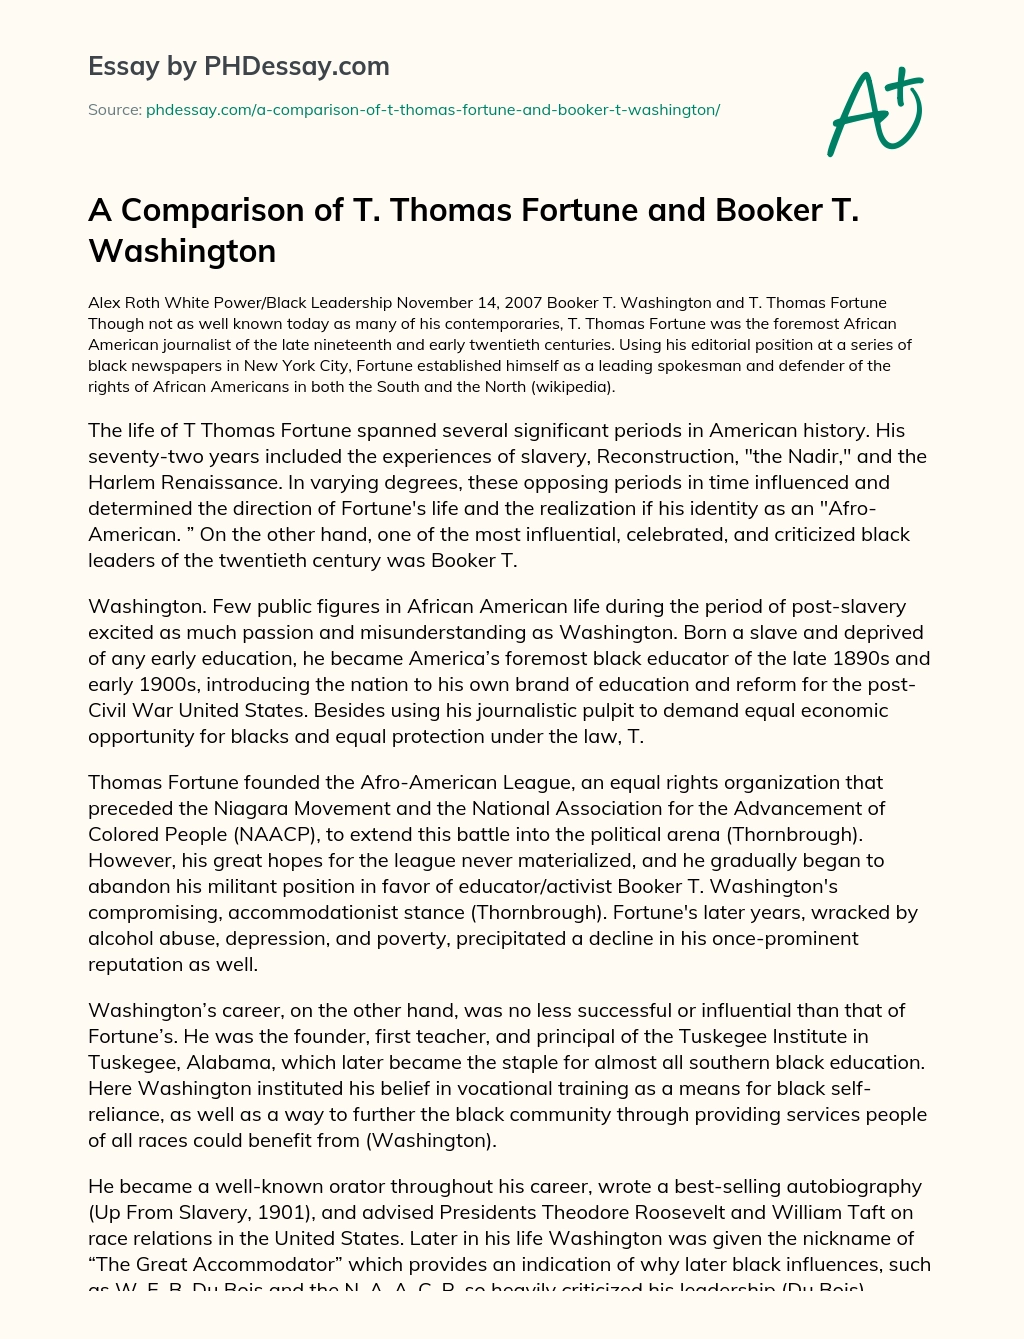 A Comparison of T. Thomas Fortune and Booker T. Washington essay